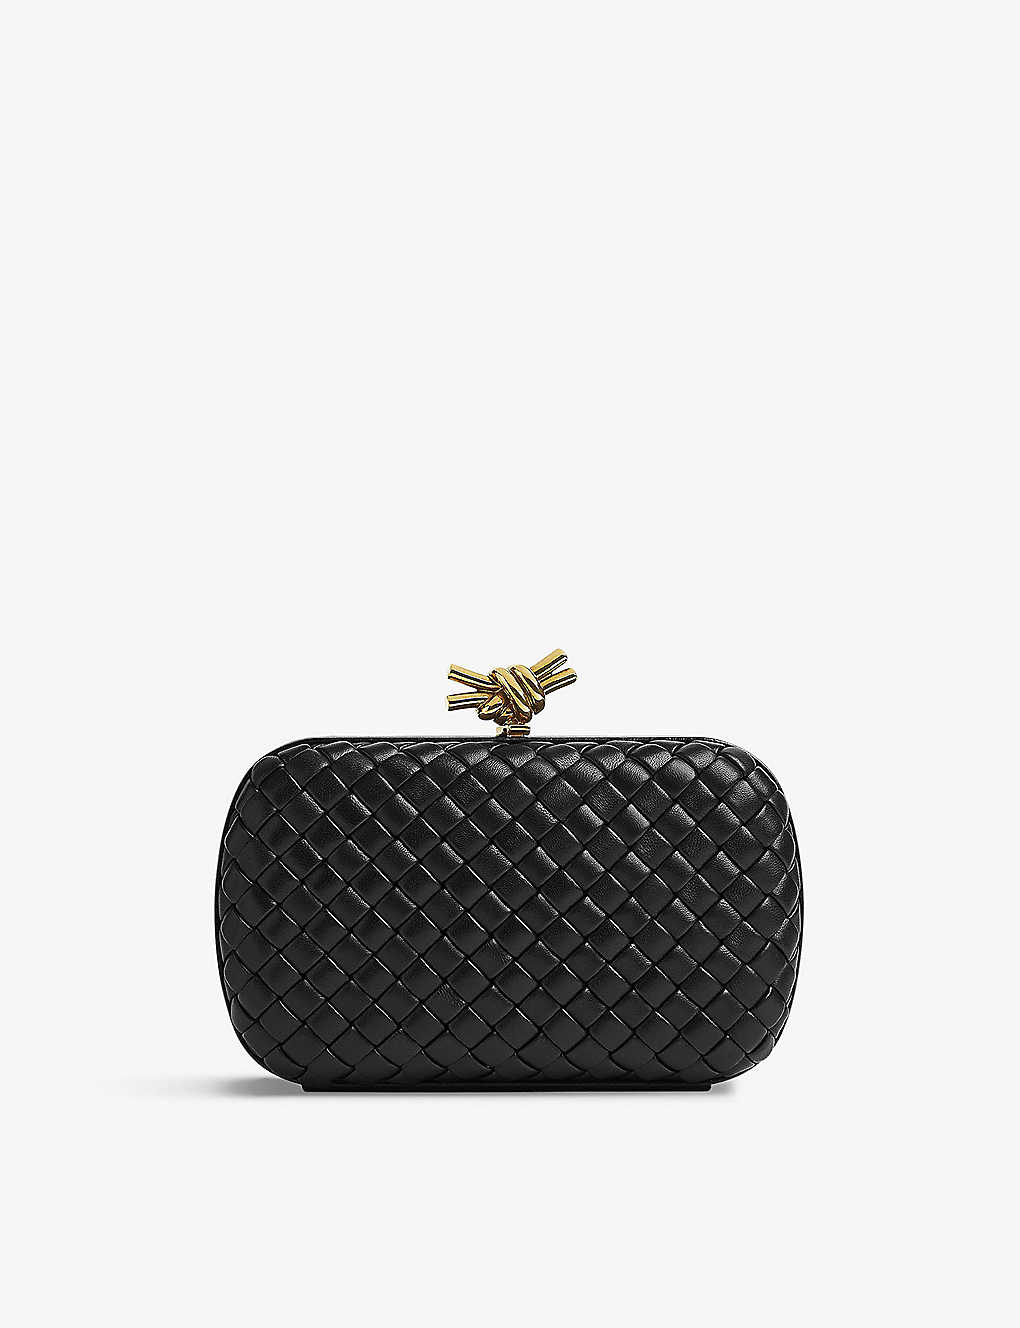 Bottega Veneta Womens Black Knot Intrecciato-woven Leather Clutch Bag